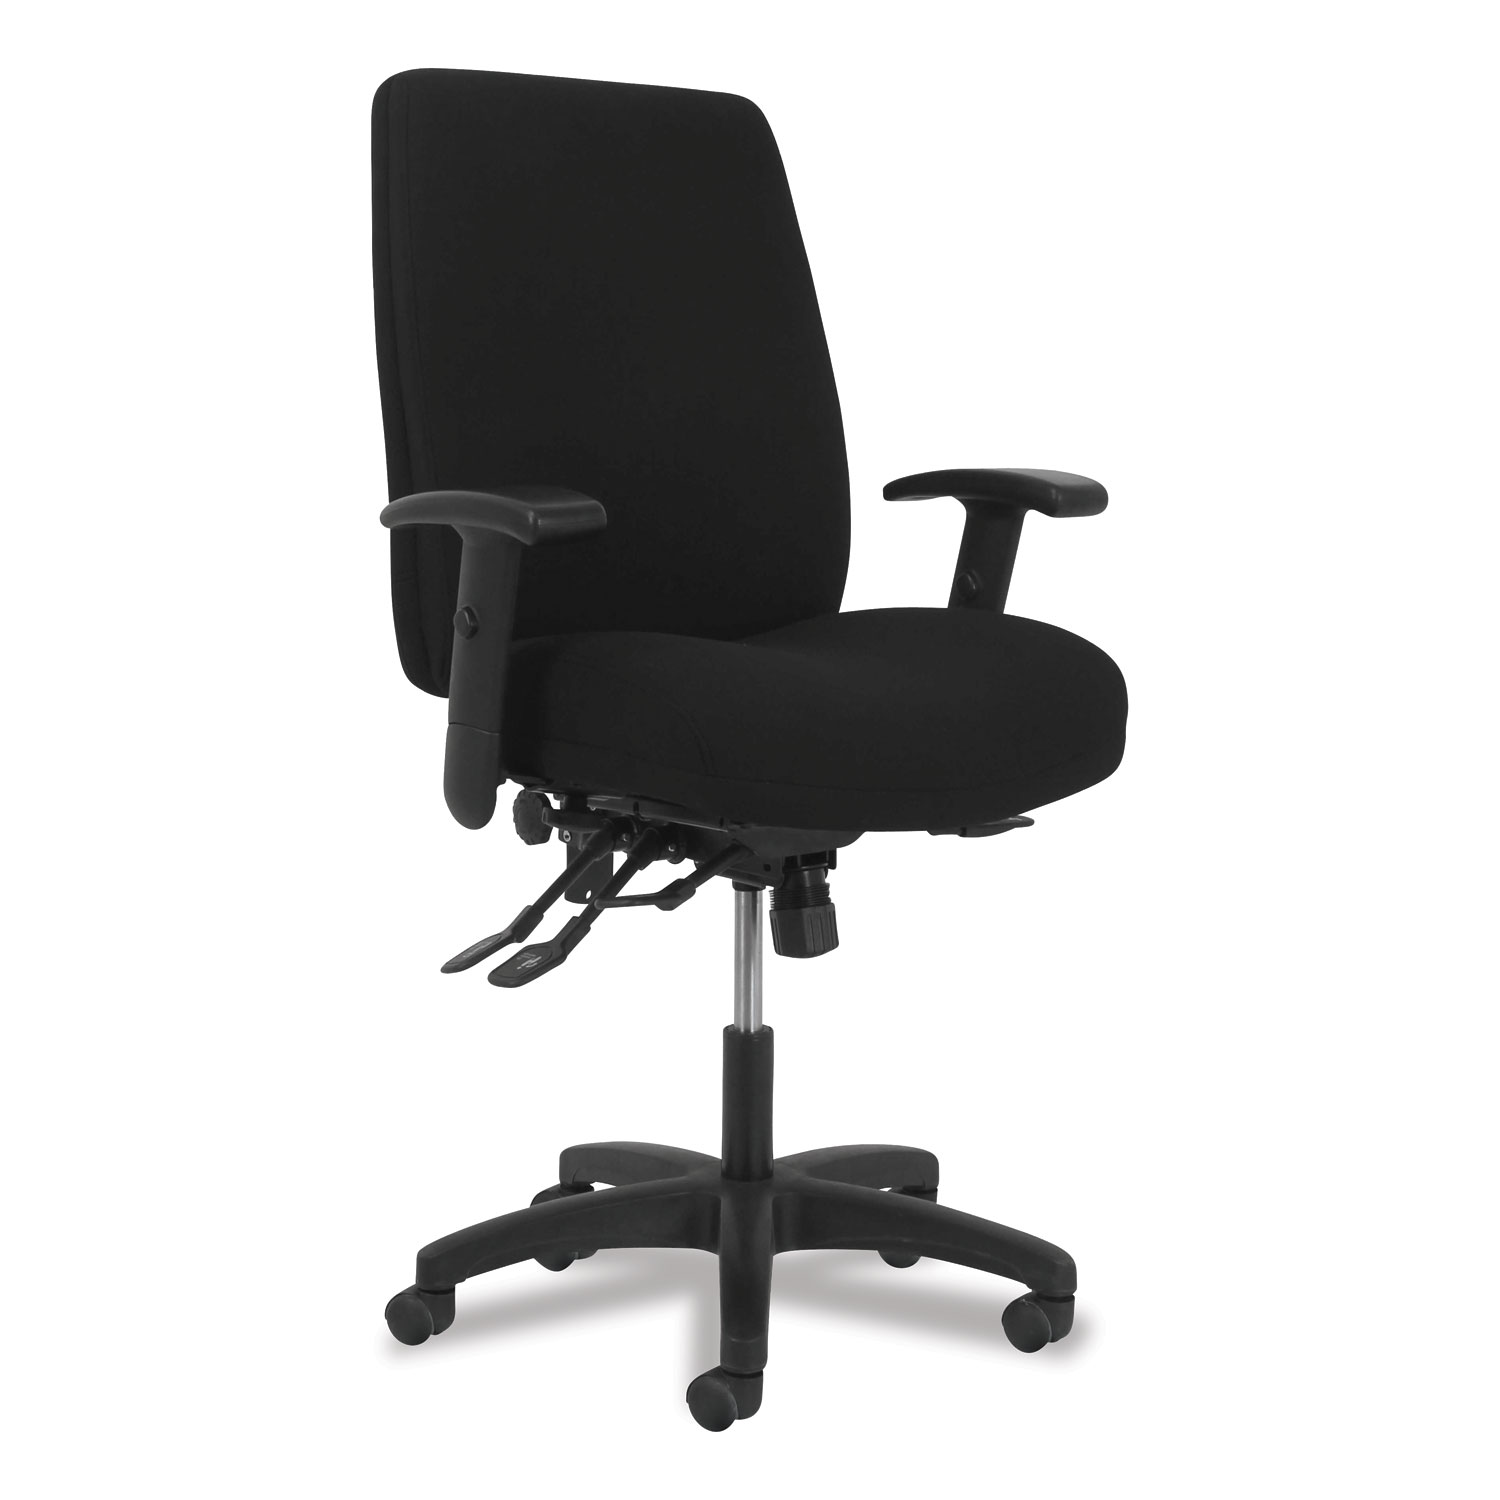  HON HONVL283A2VA10T Network High-Back Chair, Supports up to 250 lbs., Black Seat/Black Back, Black Base (HONVL283A2VA10T) 